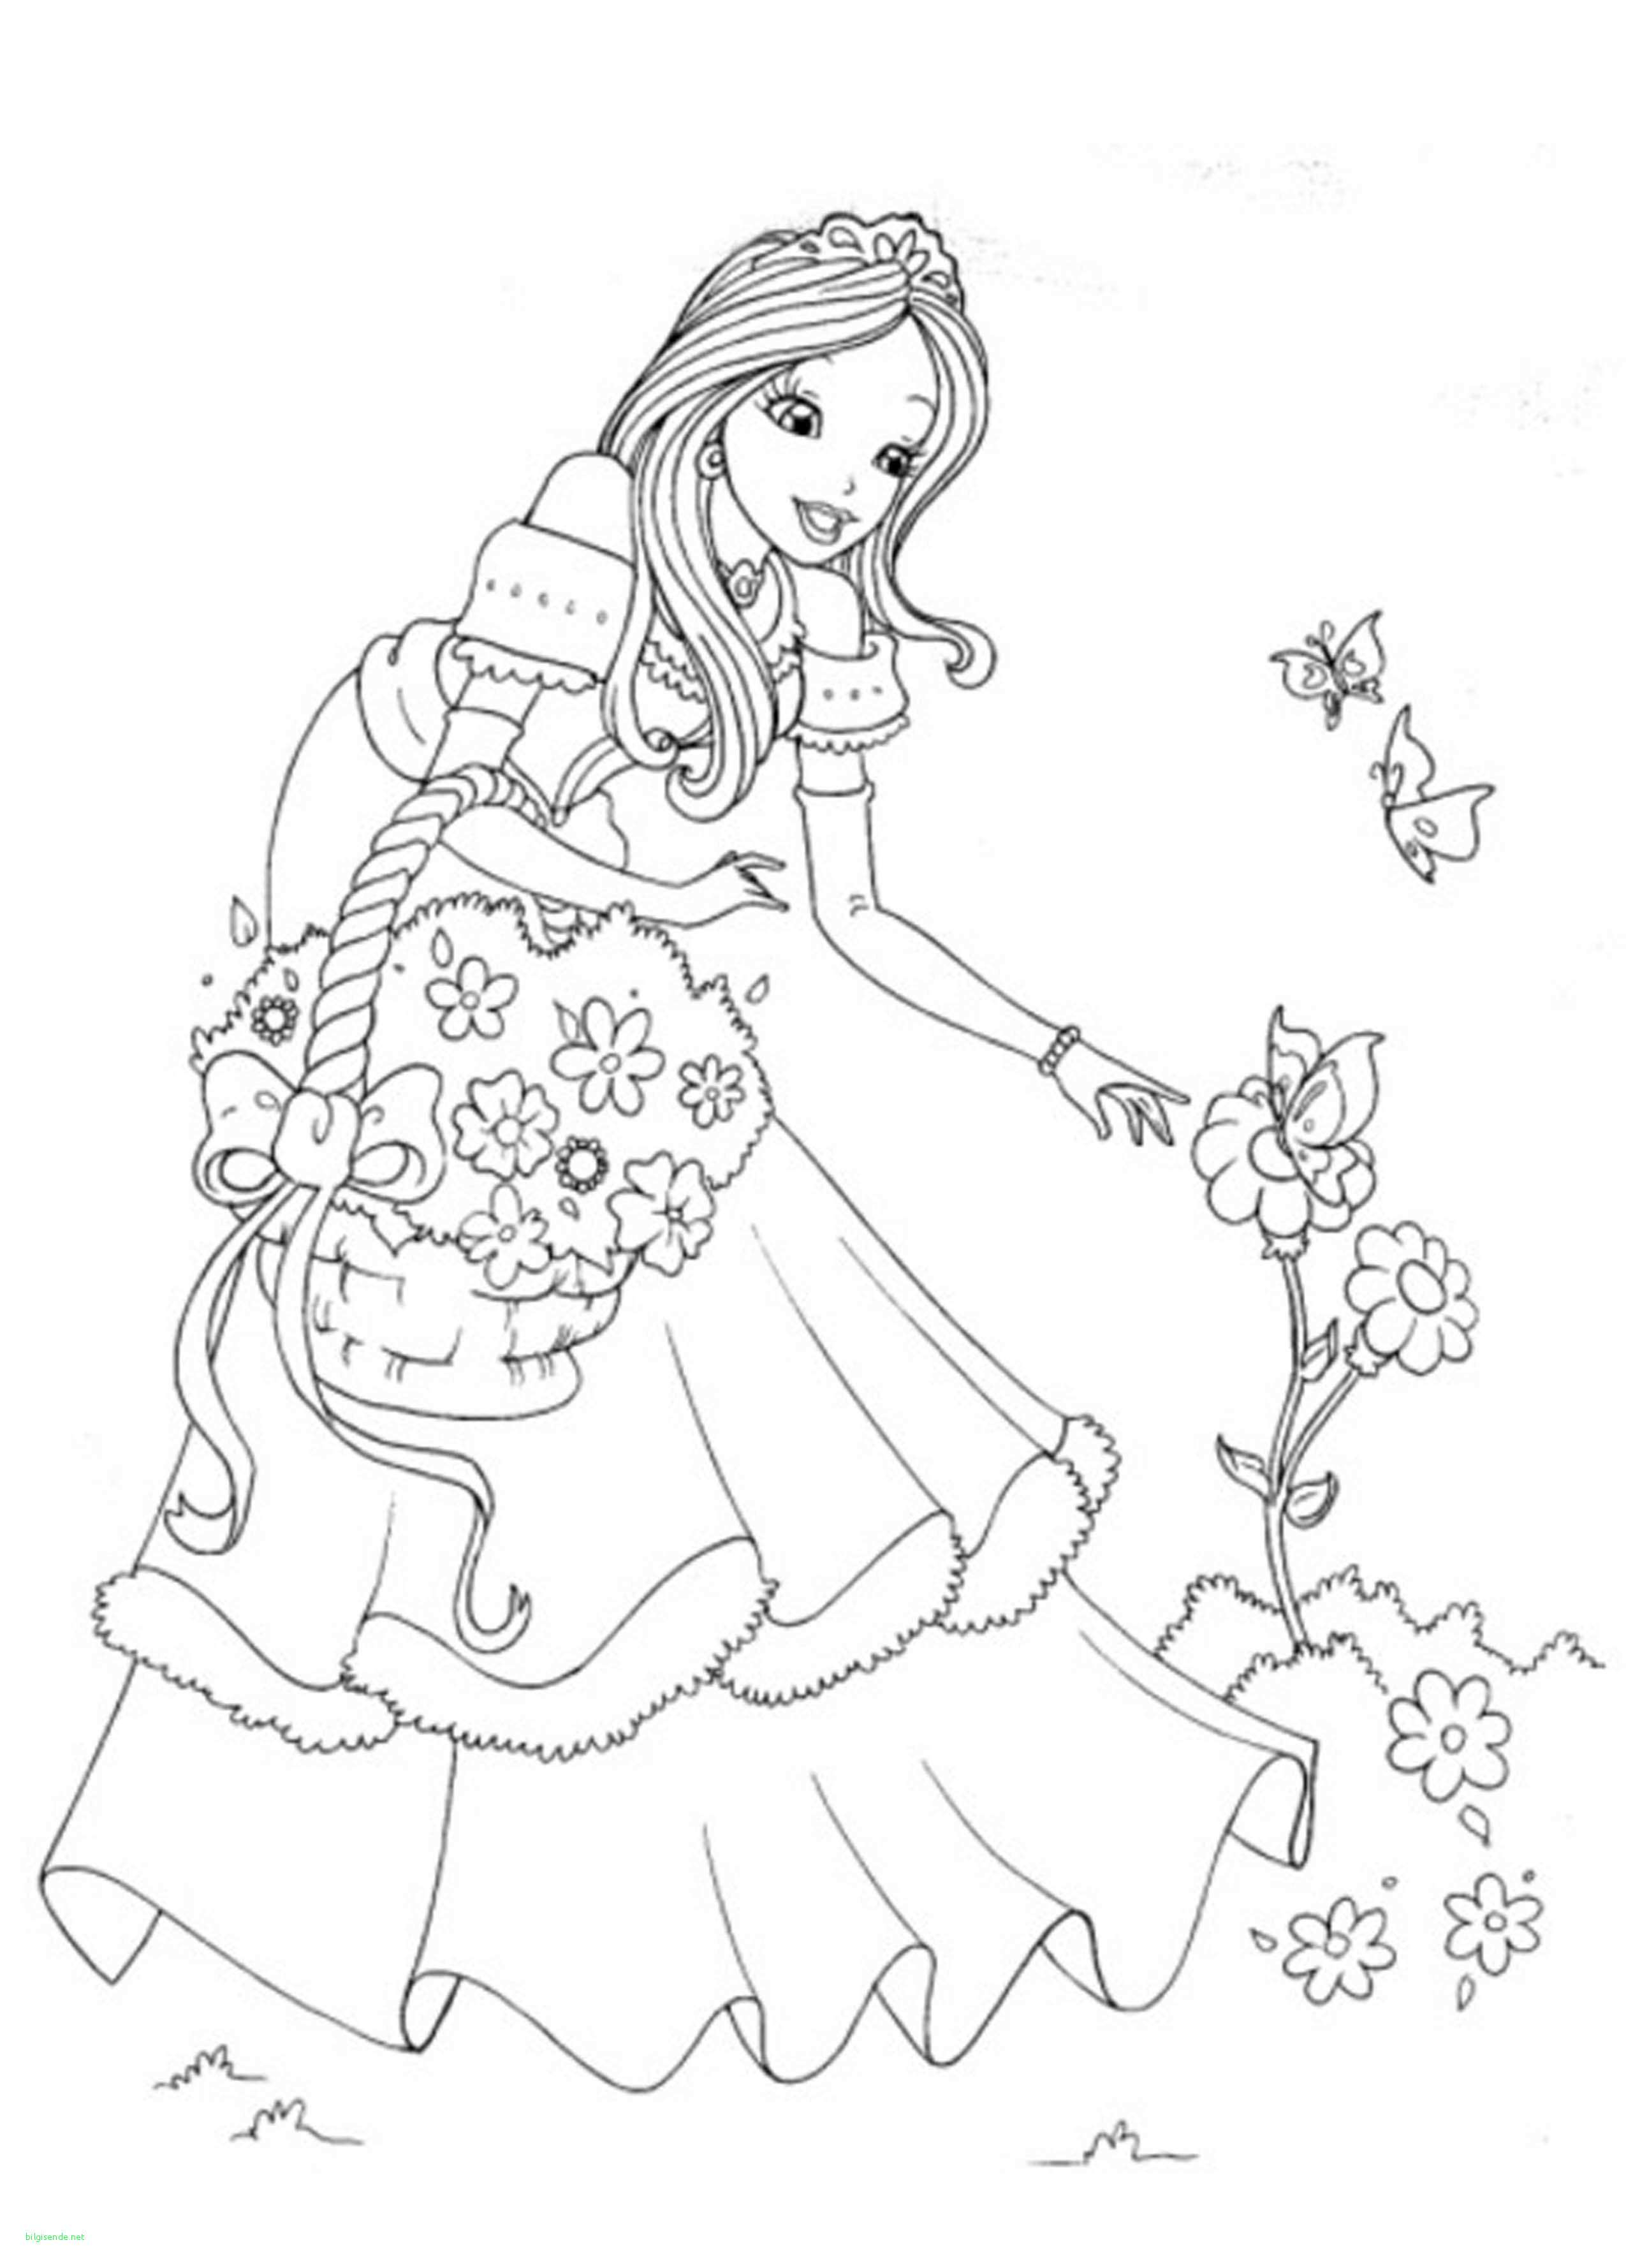 Disney Princess Coloring Pages Printable Princess Coloring Pages To Print Inspirational Lovely Disney